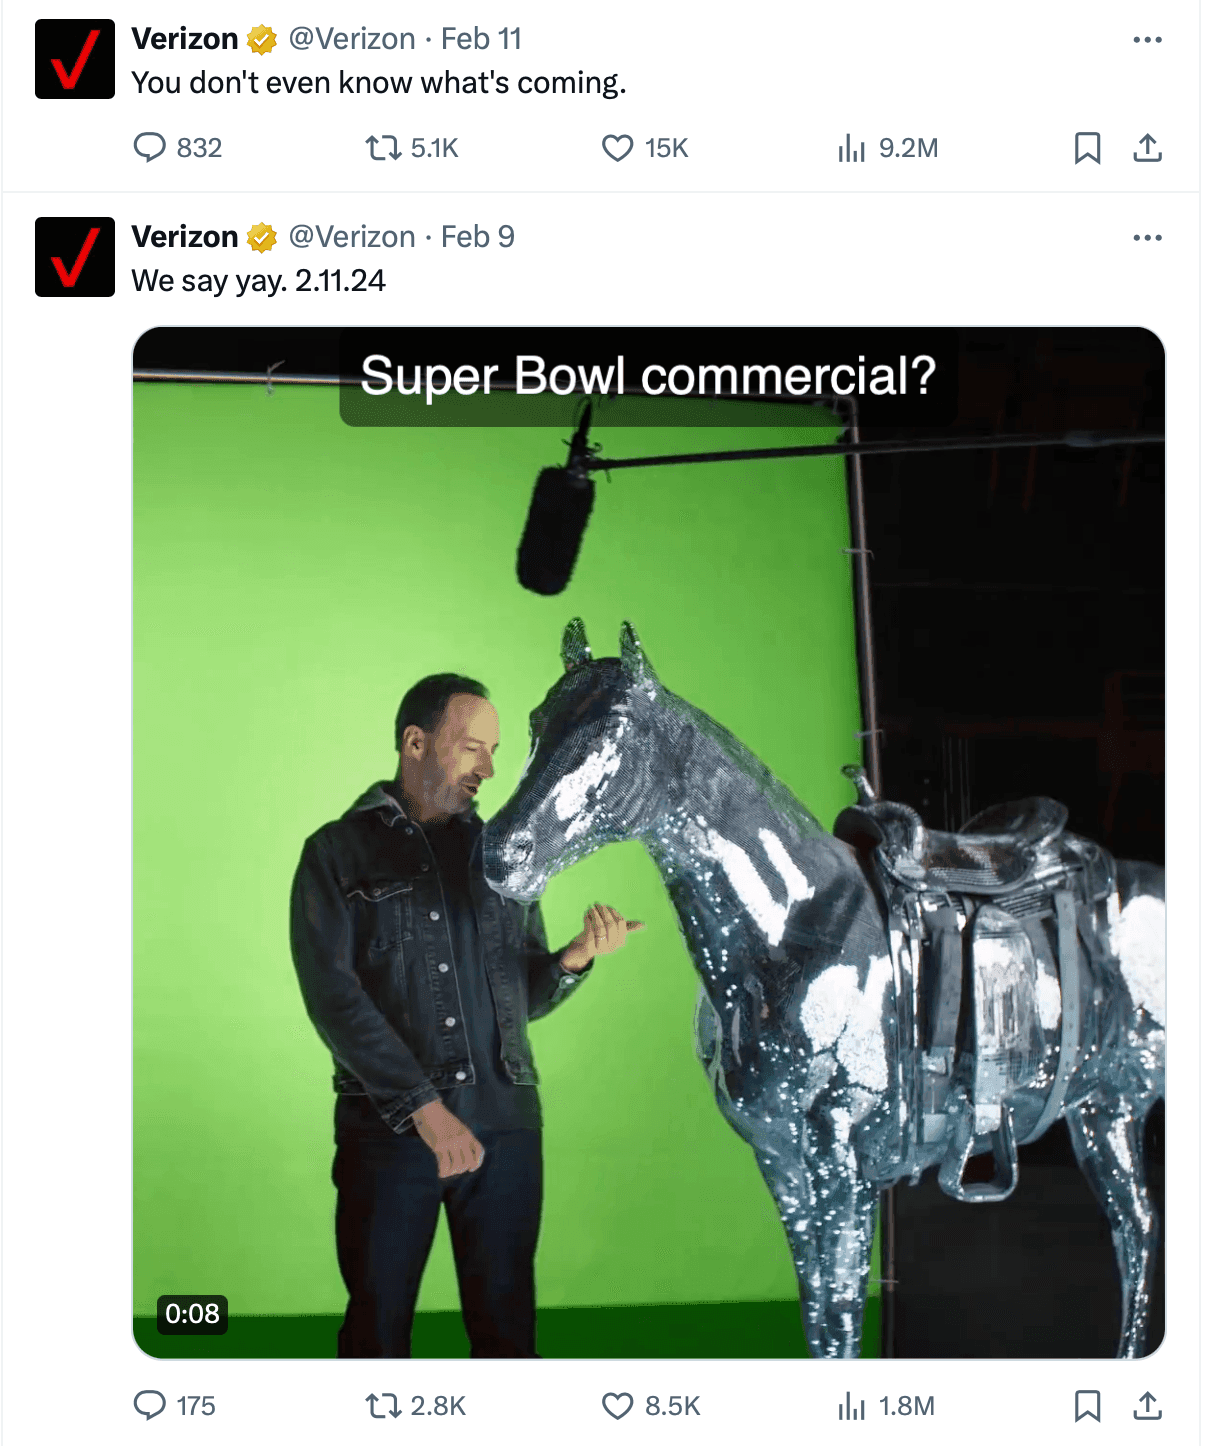 Verizon superbowl commercial teaser tweet